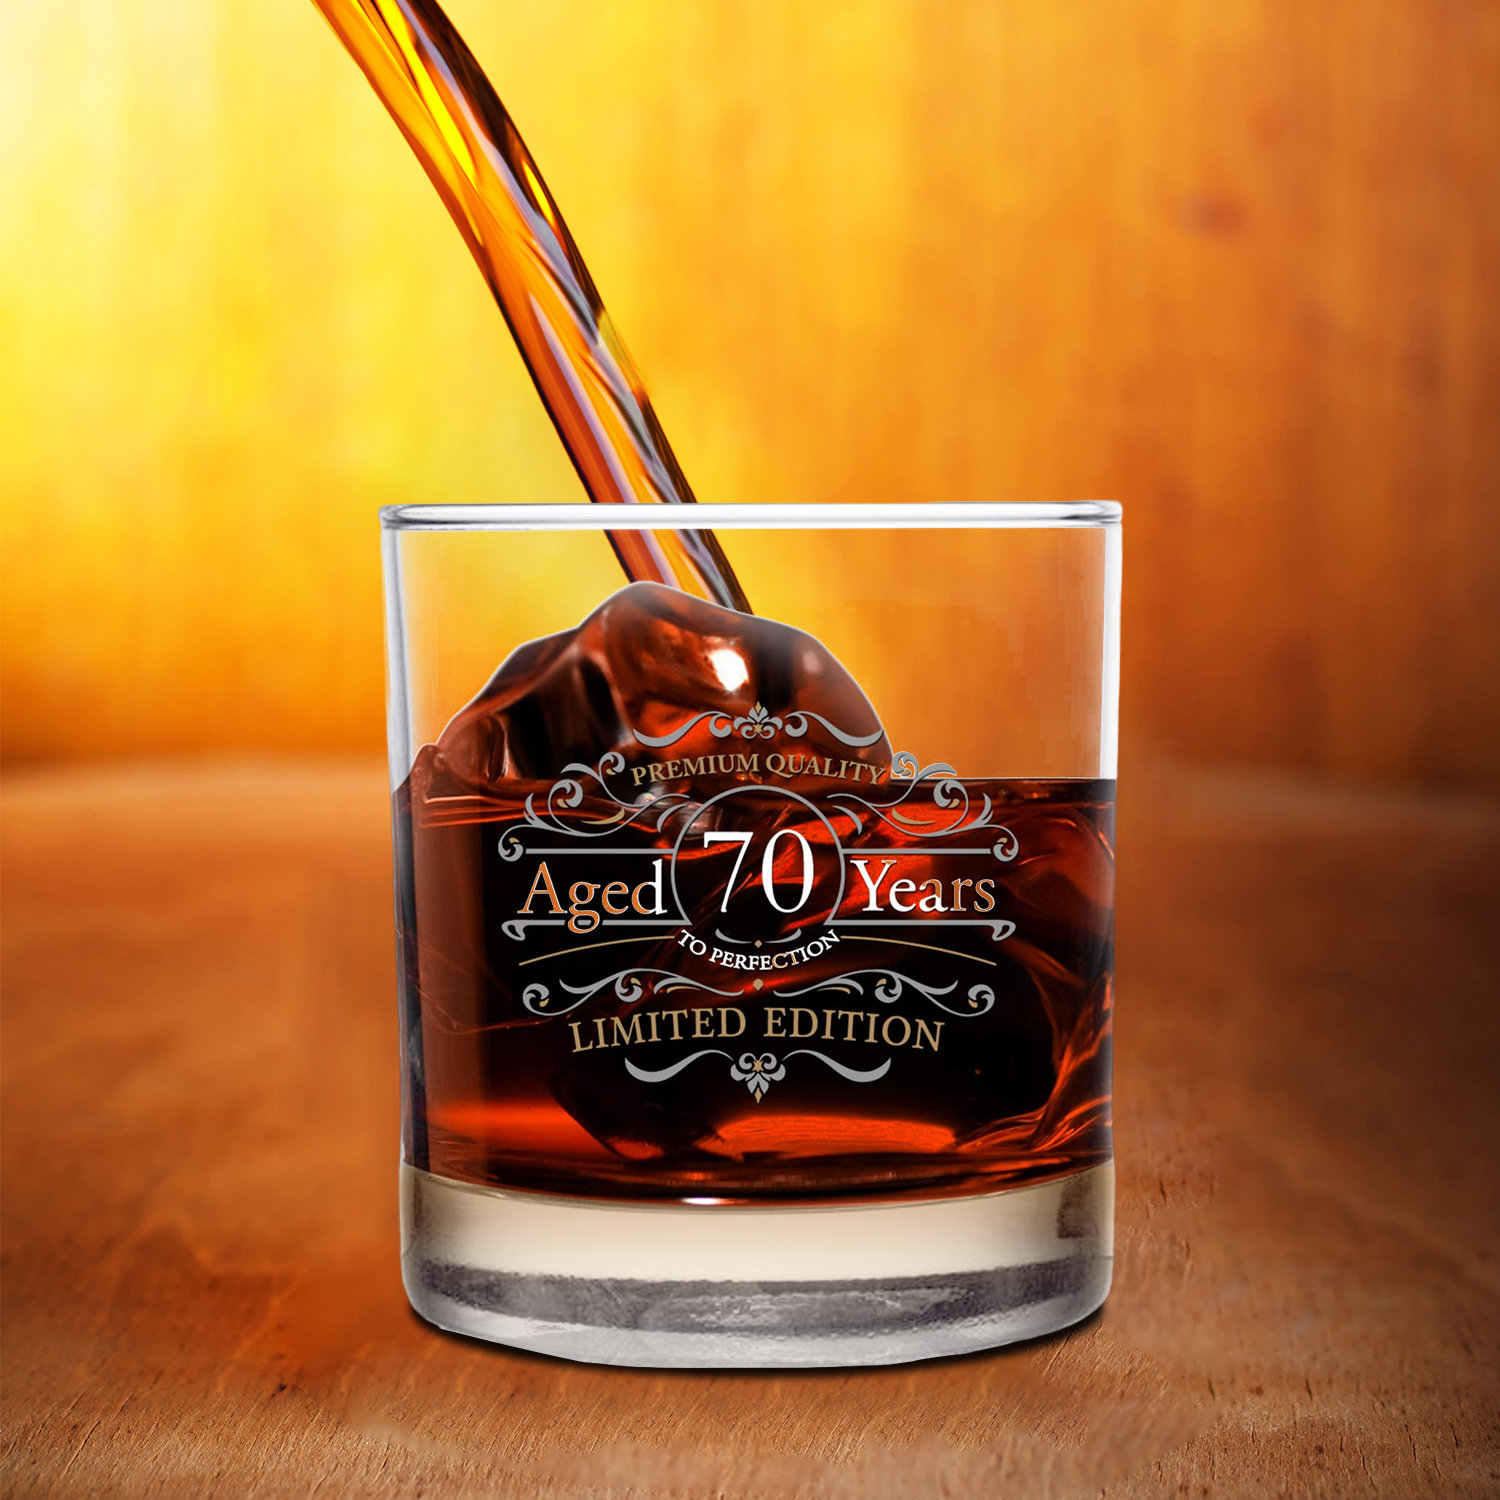 Qxttech 4 - Piece 10oz. Crystal Whiskey Glass Glassware Set